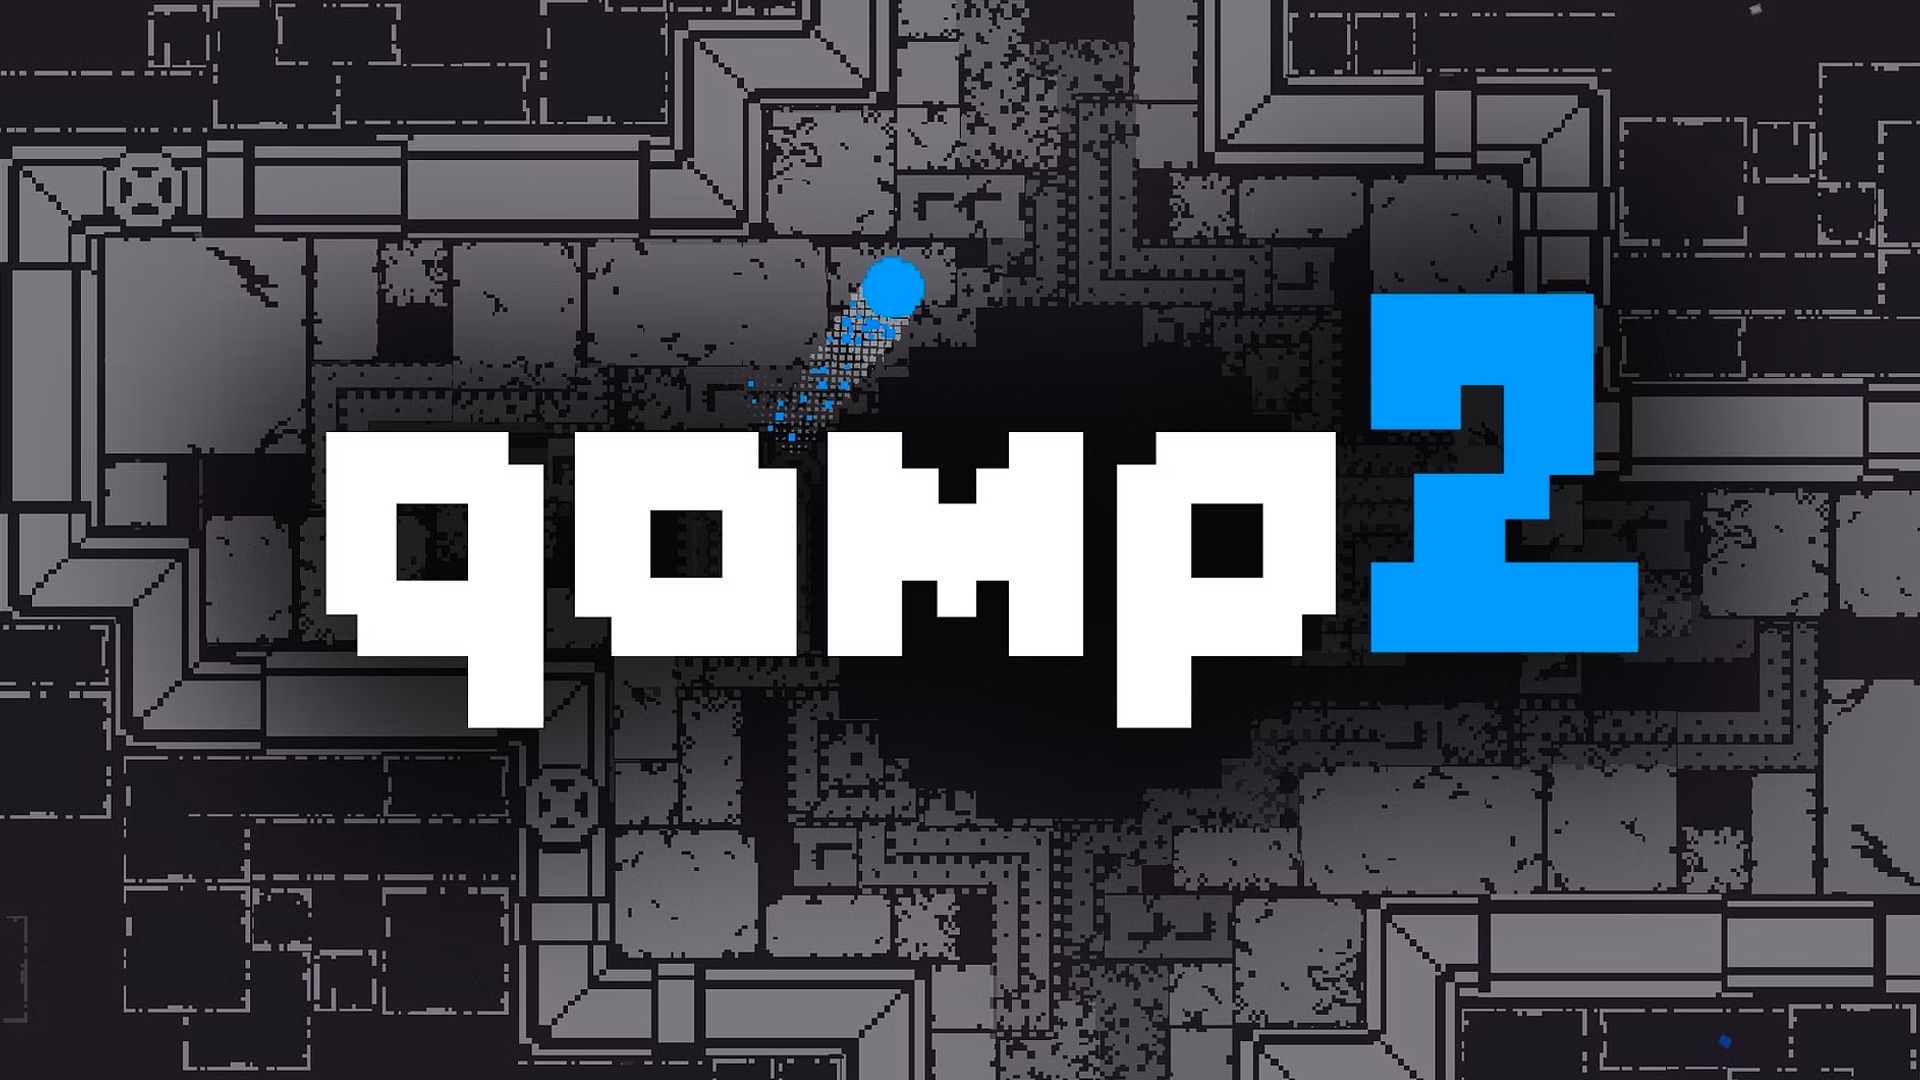 qomp2 Apk Mobile Android Version Full Game Setup Free Download